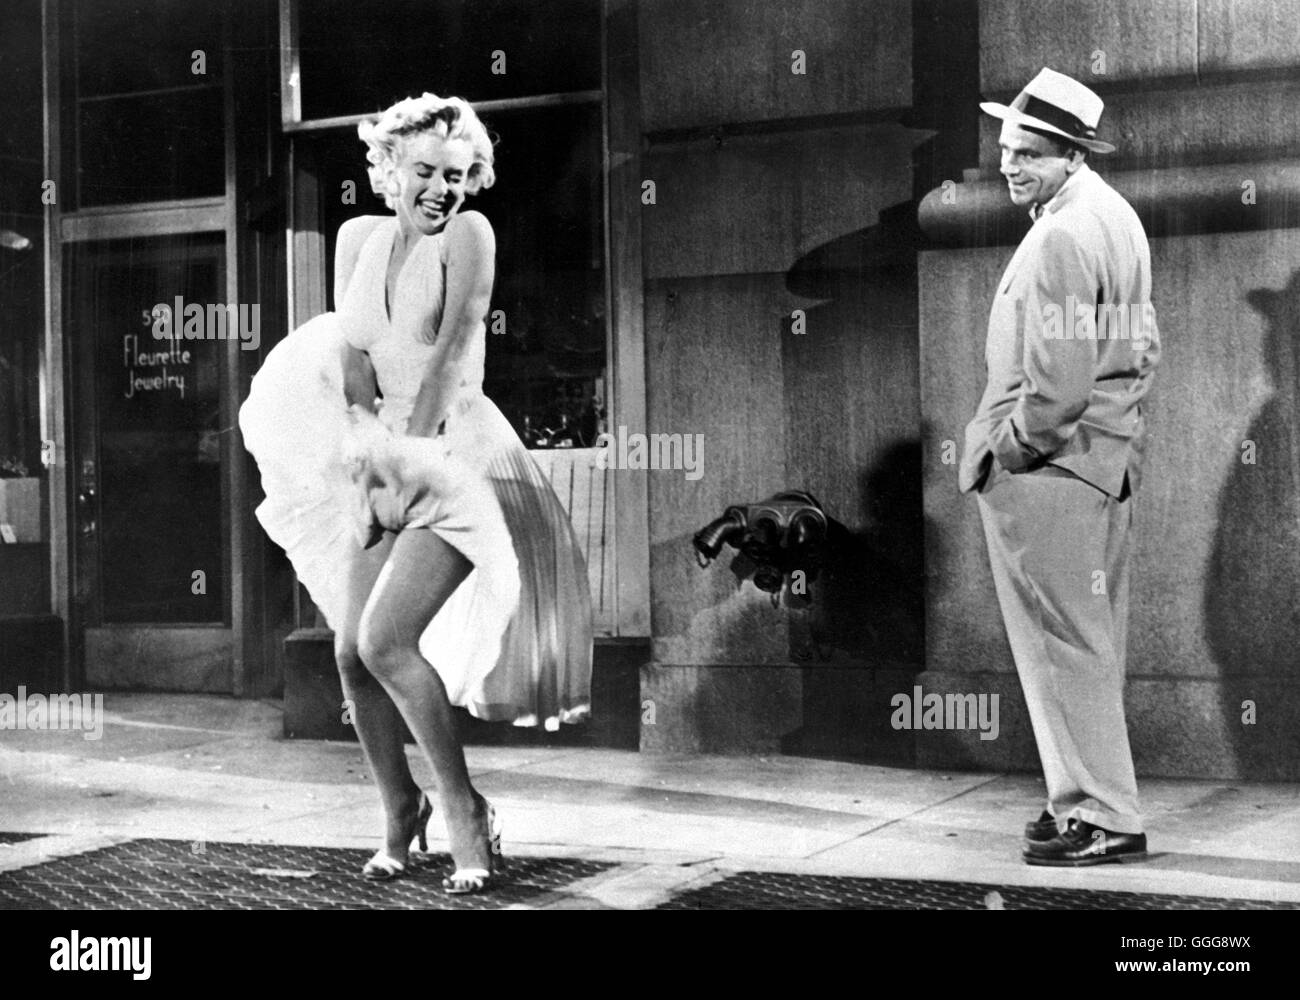 DAS VERFLIXTE 7. JAHR / The Seven Year Itch USA 1955 / Billy Wilder MARILYN MONROE, TOM EWELL, 'The Seven Year Itch', 1955. Regie: Billy Wilder aka. The Seven Year Itch Stock Photo